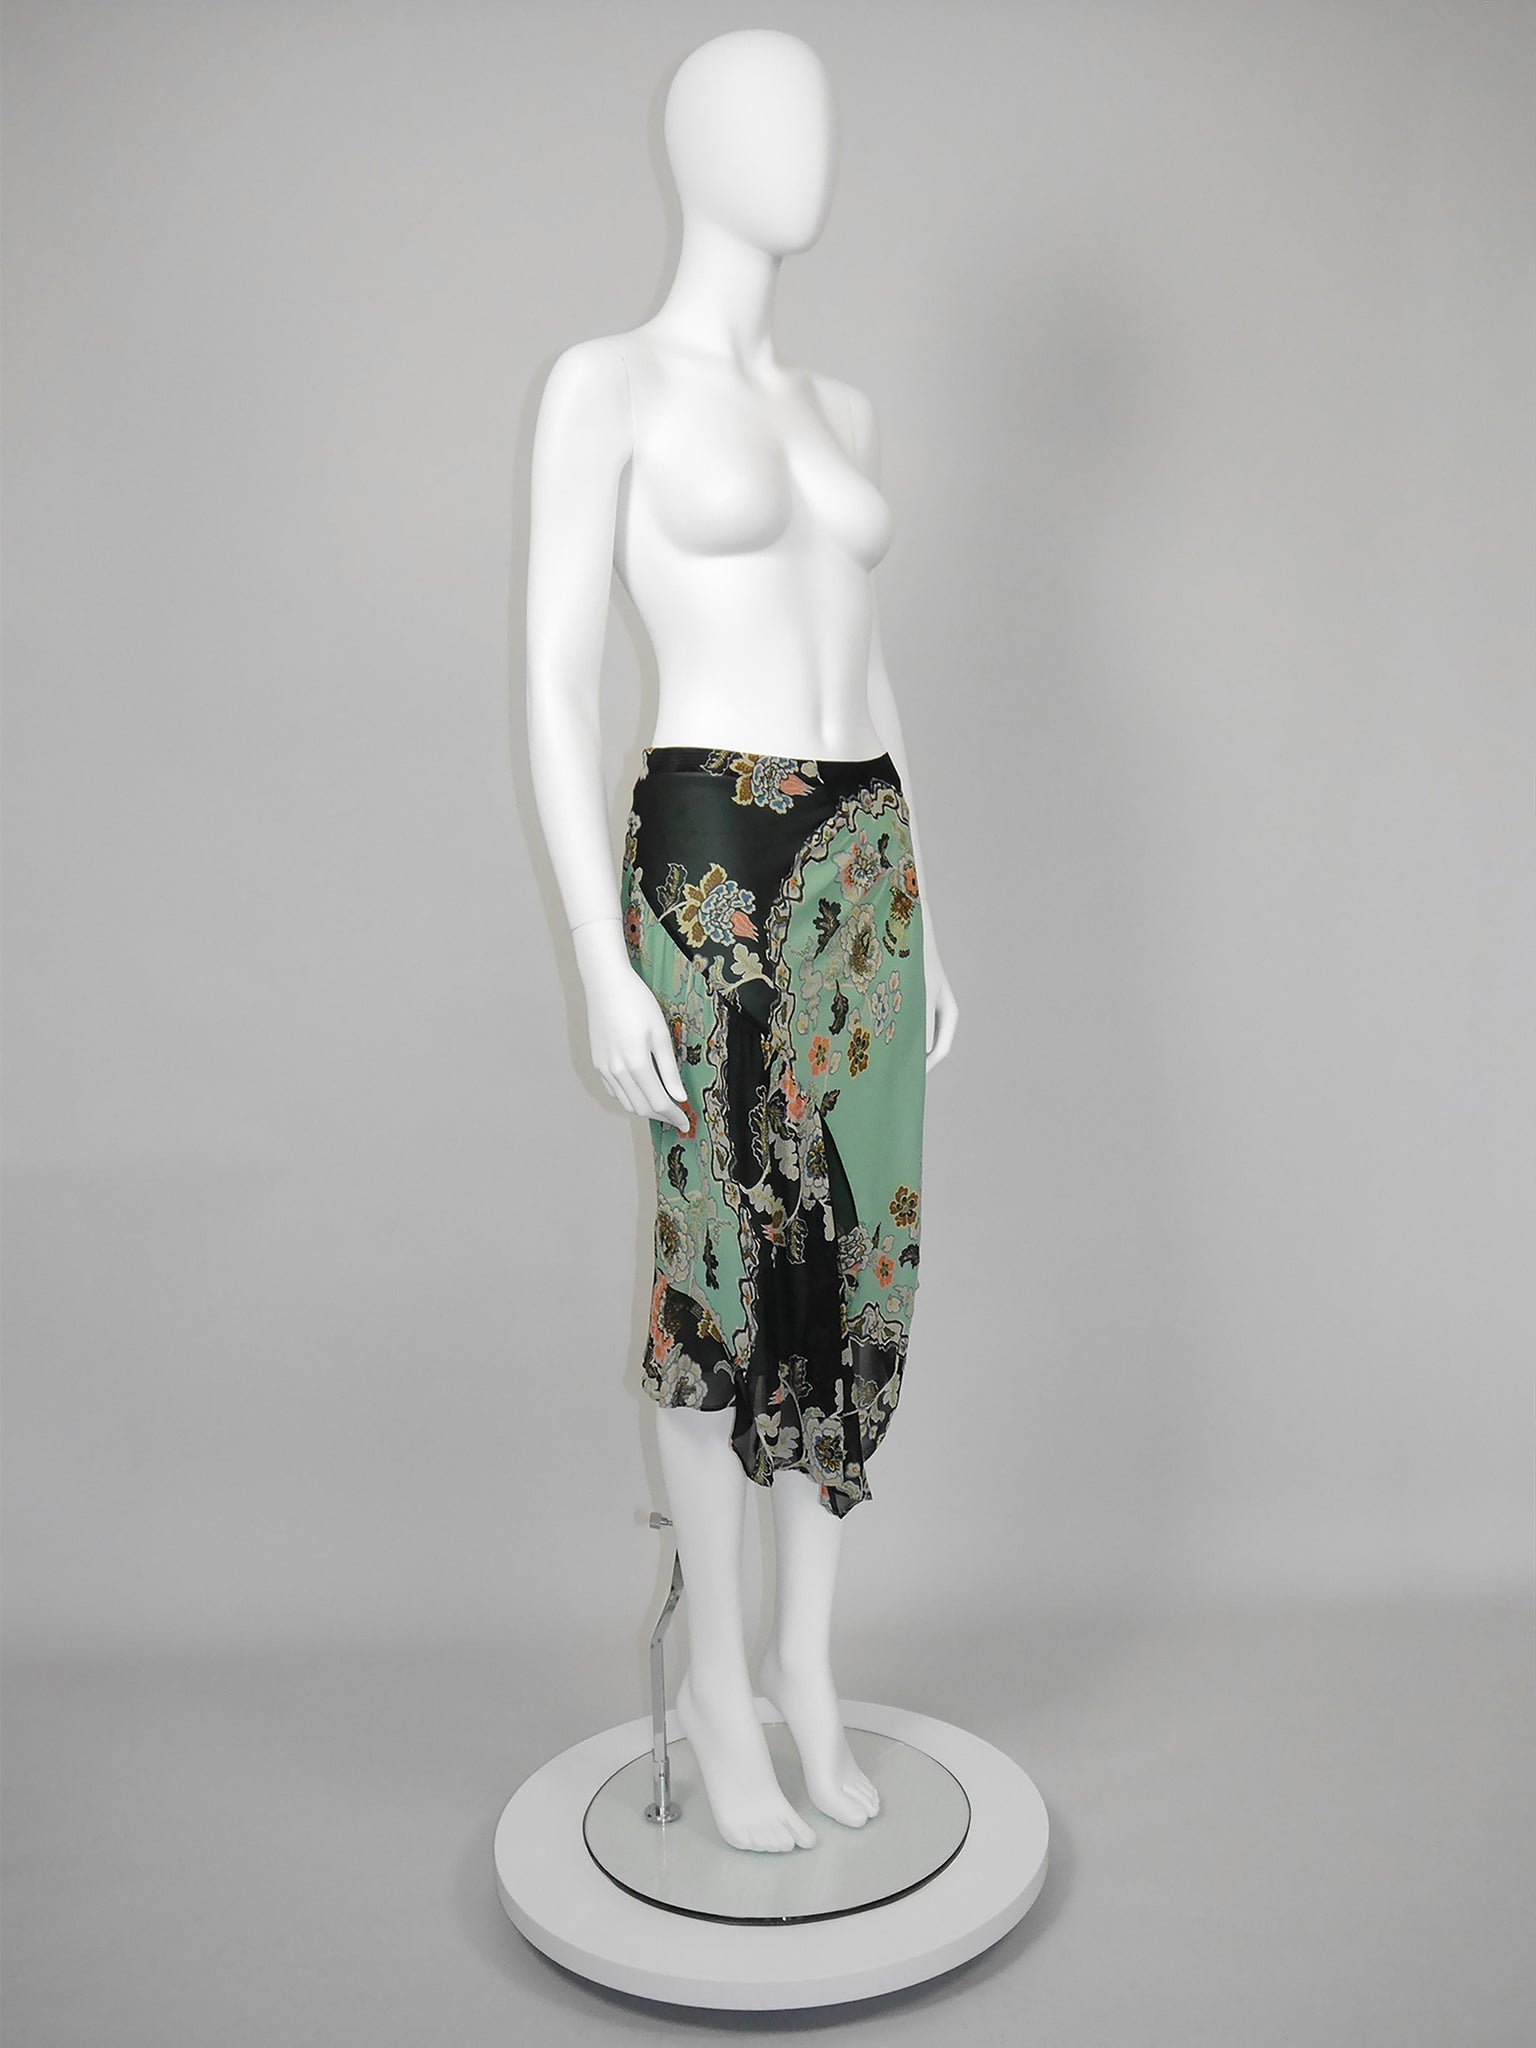 ROBERTO CAVALLI Spring 2003 Vintage Asian Floral Silk Skirt Size S